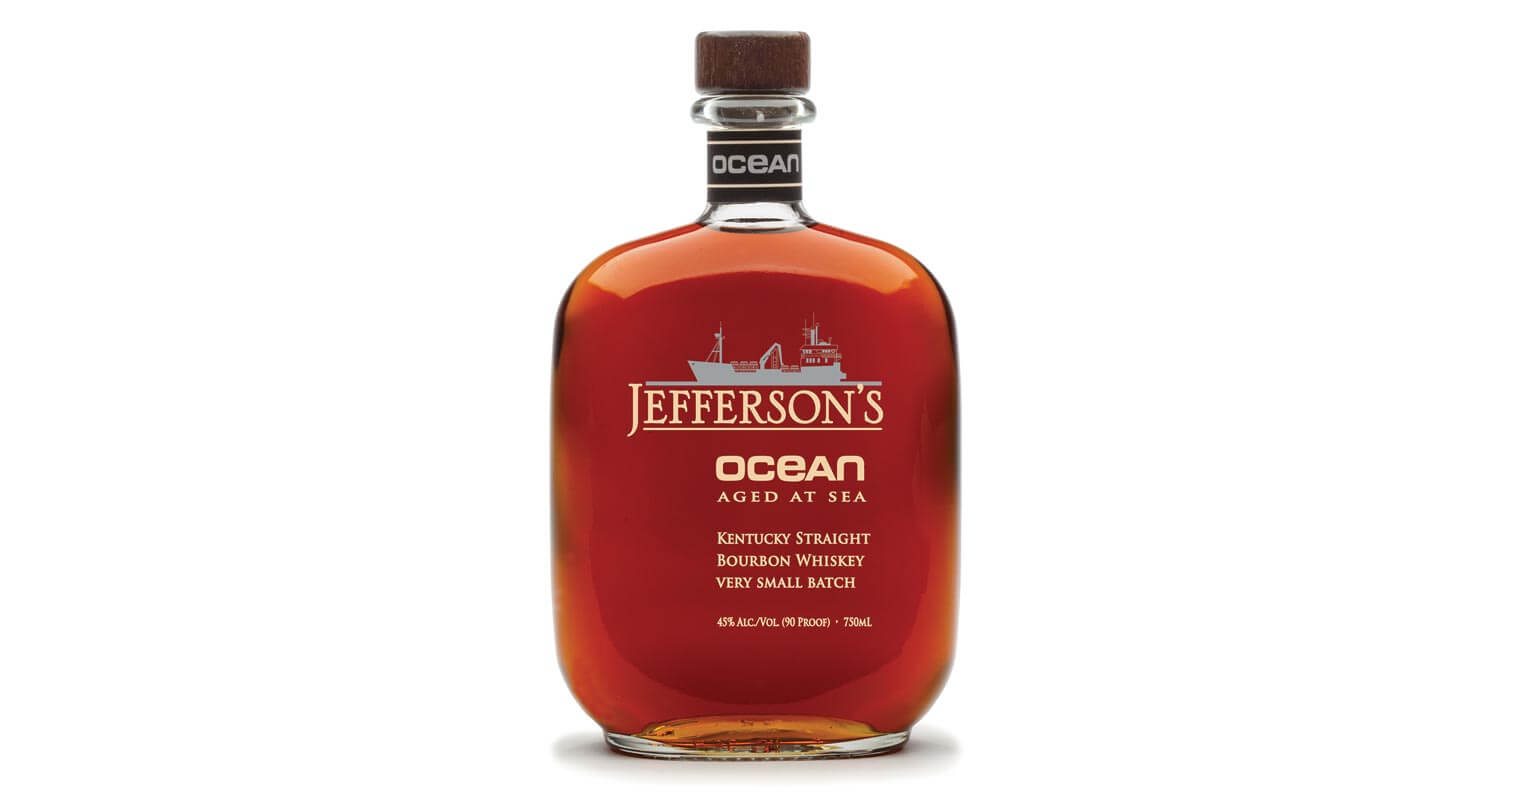 Jefferson's Ocean bottle on white, featured image